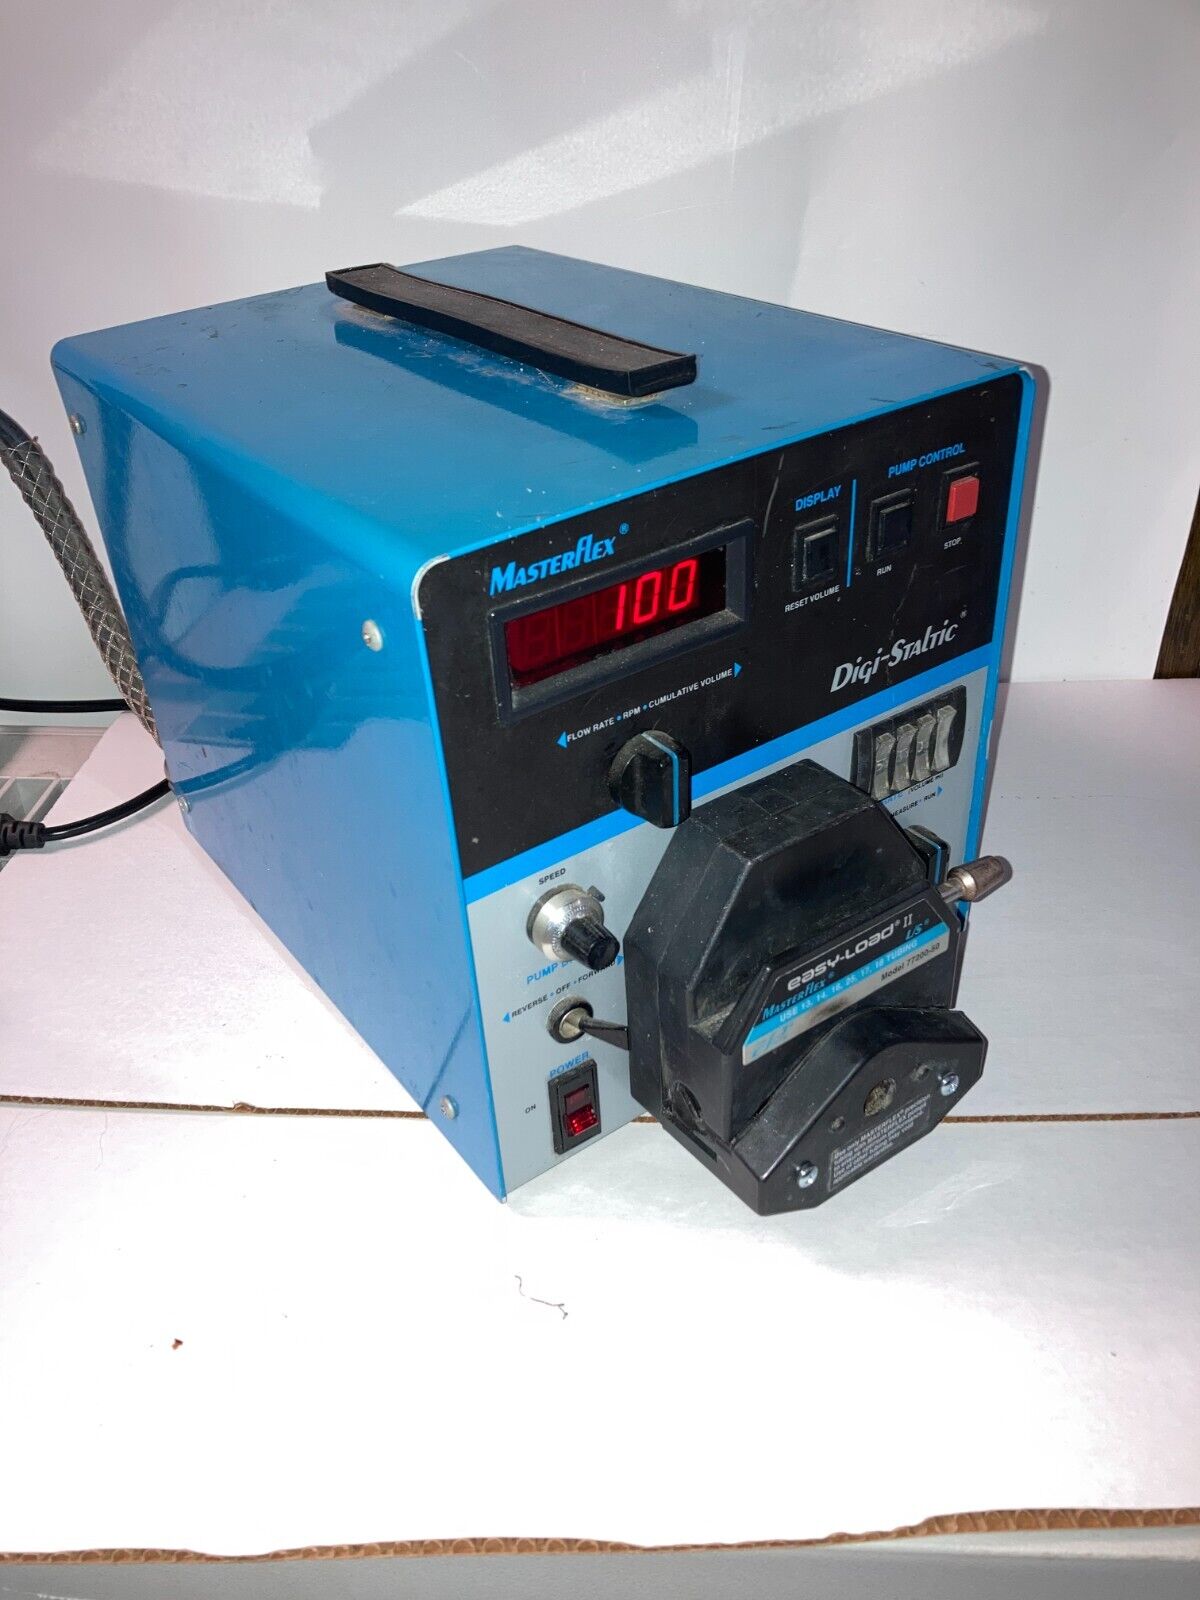 100 RPM Masterflex Digi-Staltic Peristaltic Pump with Easy-Load II Pump Head